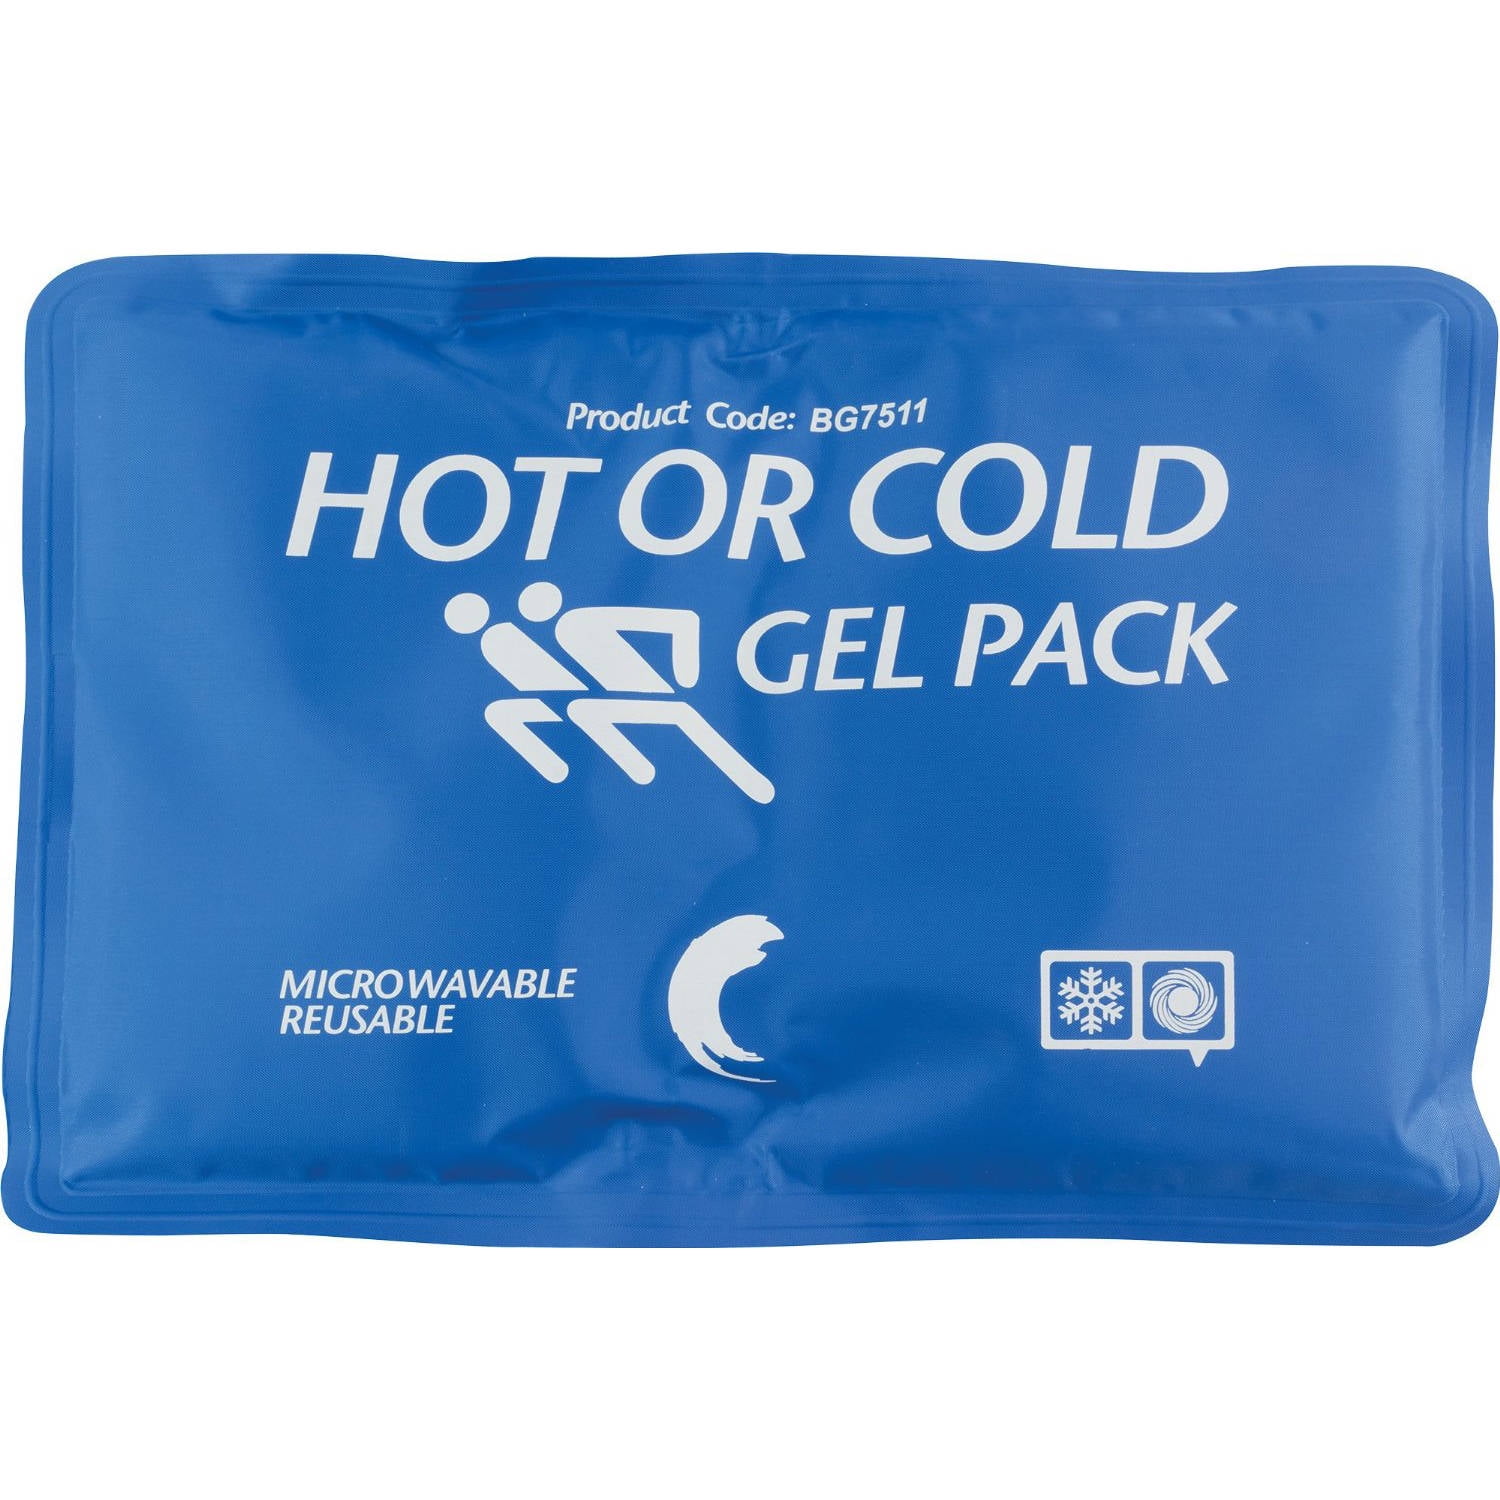 Cold pack. Gel Pack. Hot or Cold Gel Pack. Гель пак 26 производители.